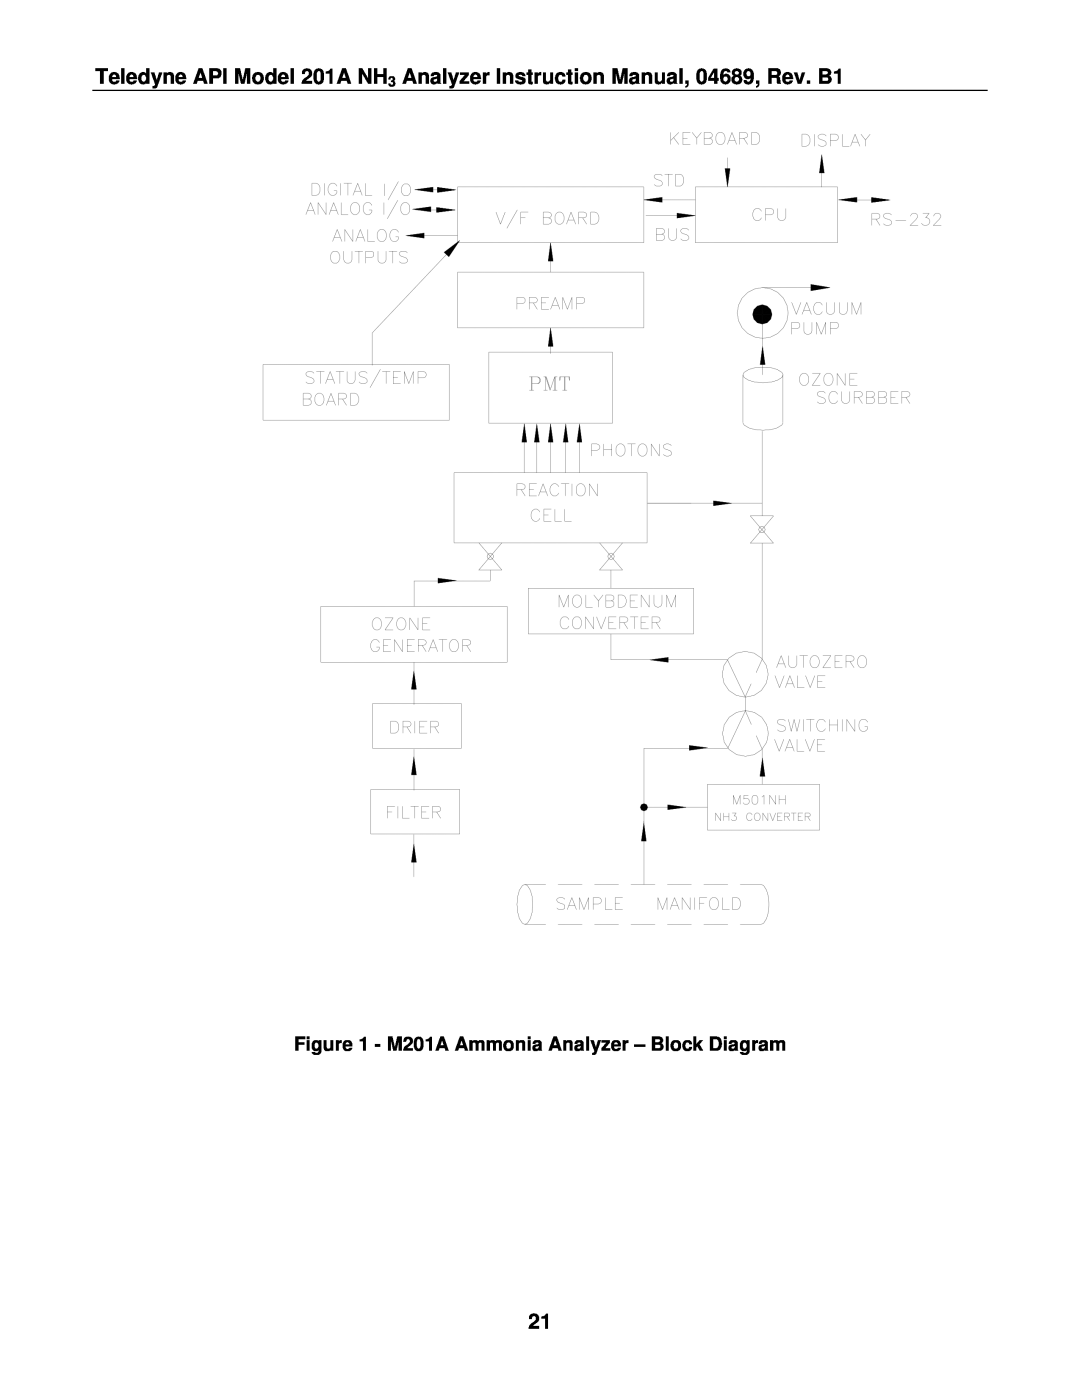 Teledyne manual M201A Ammonia Analyzer - Block Diagram 